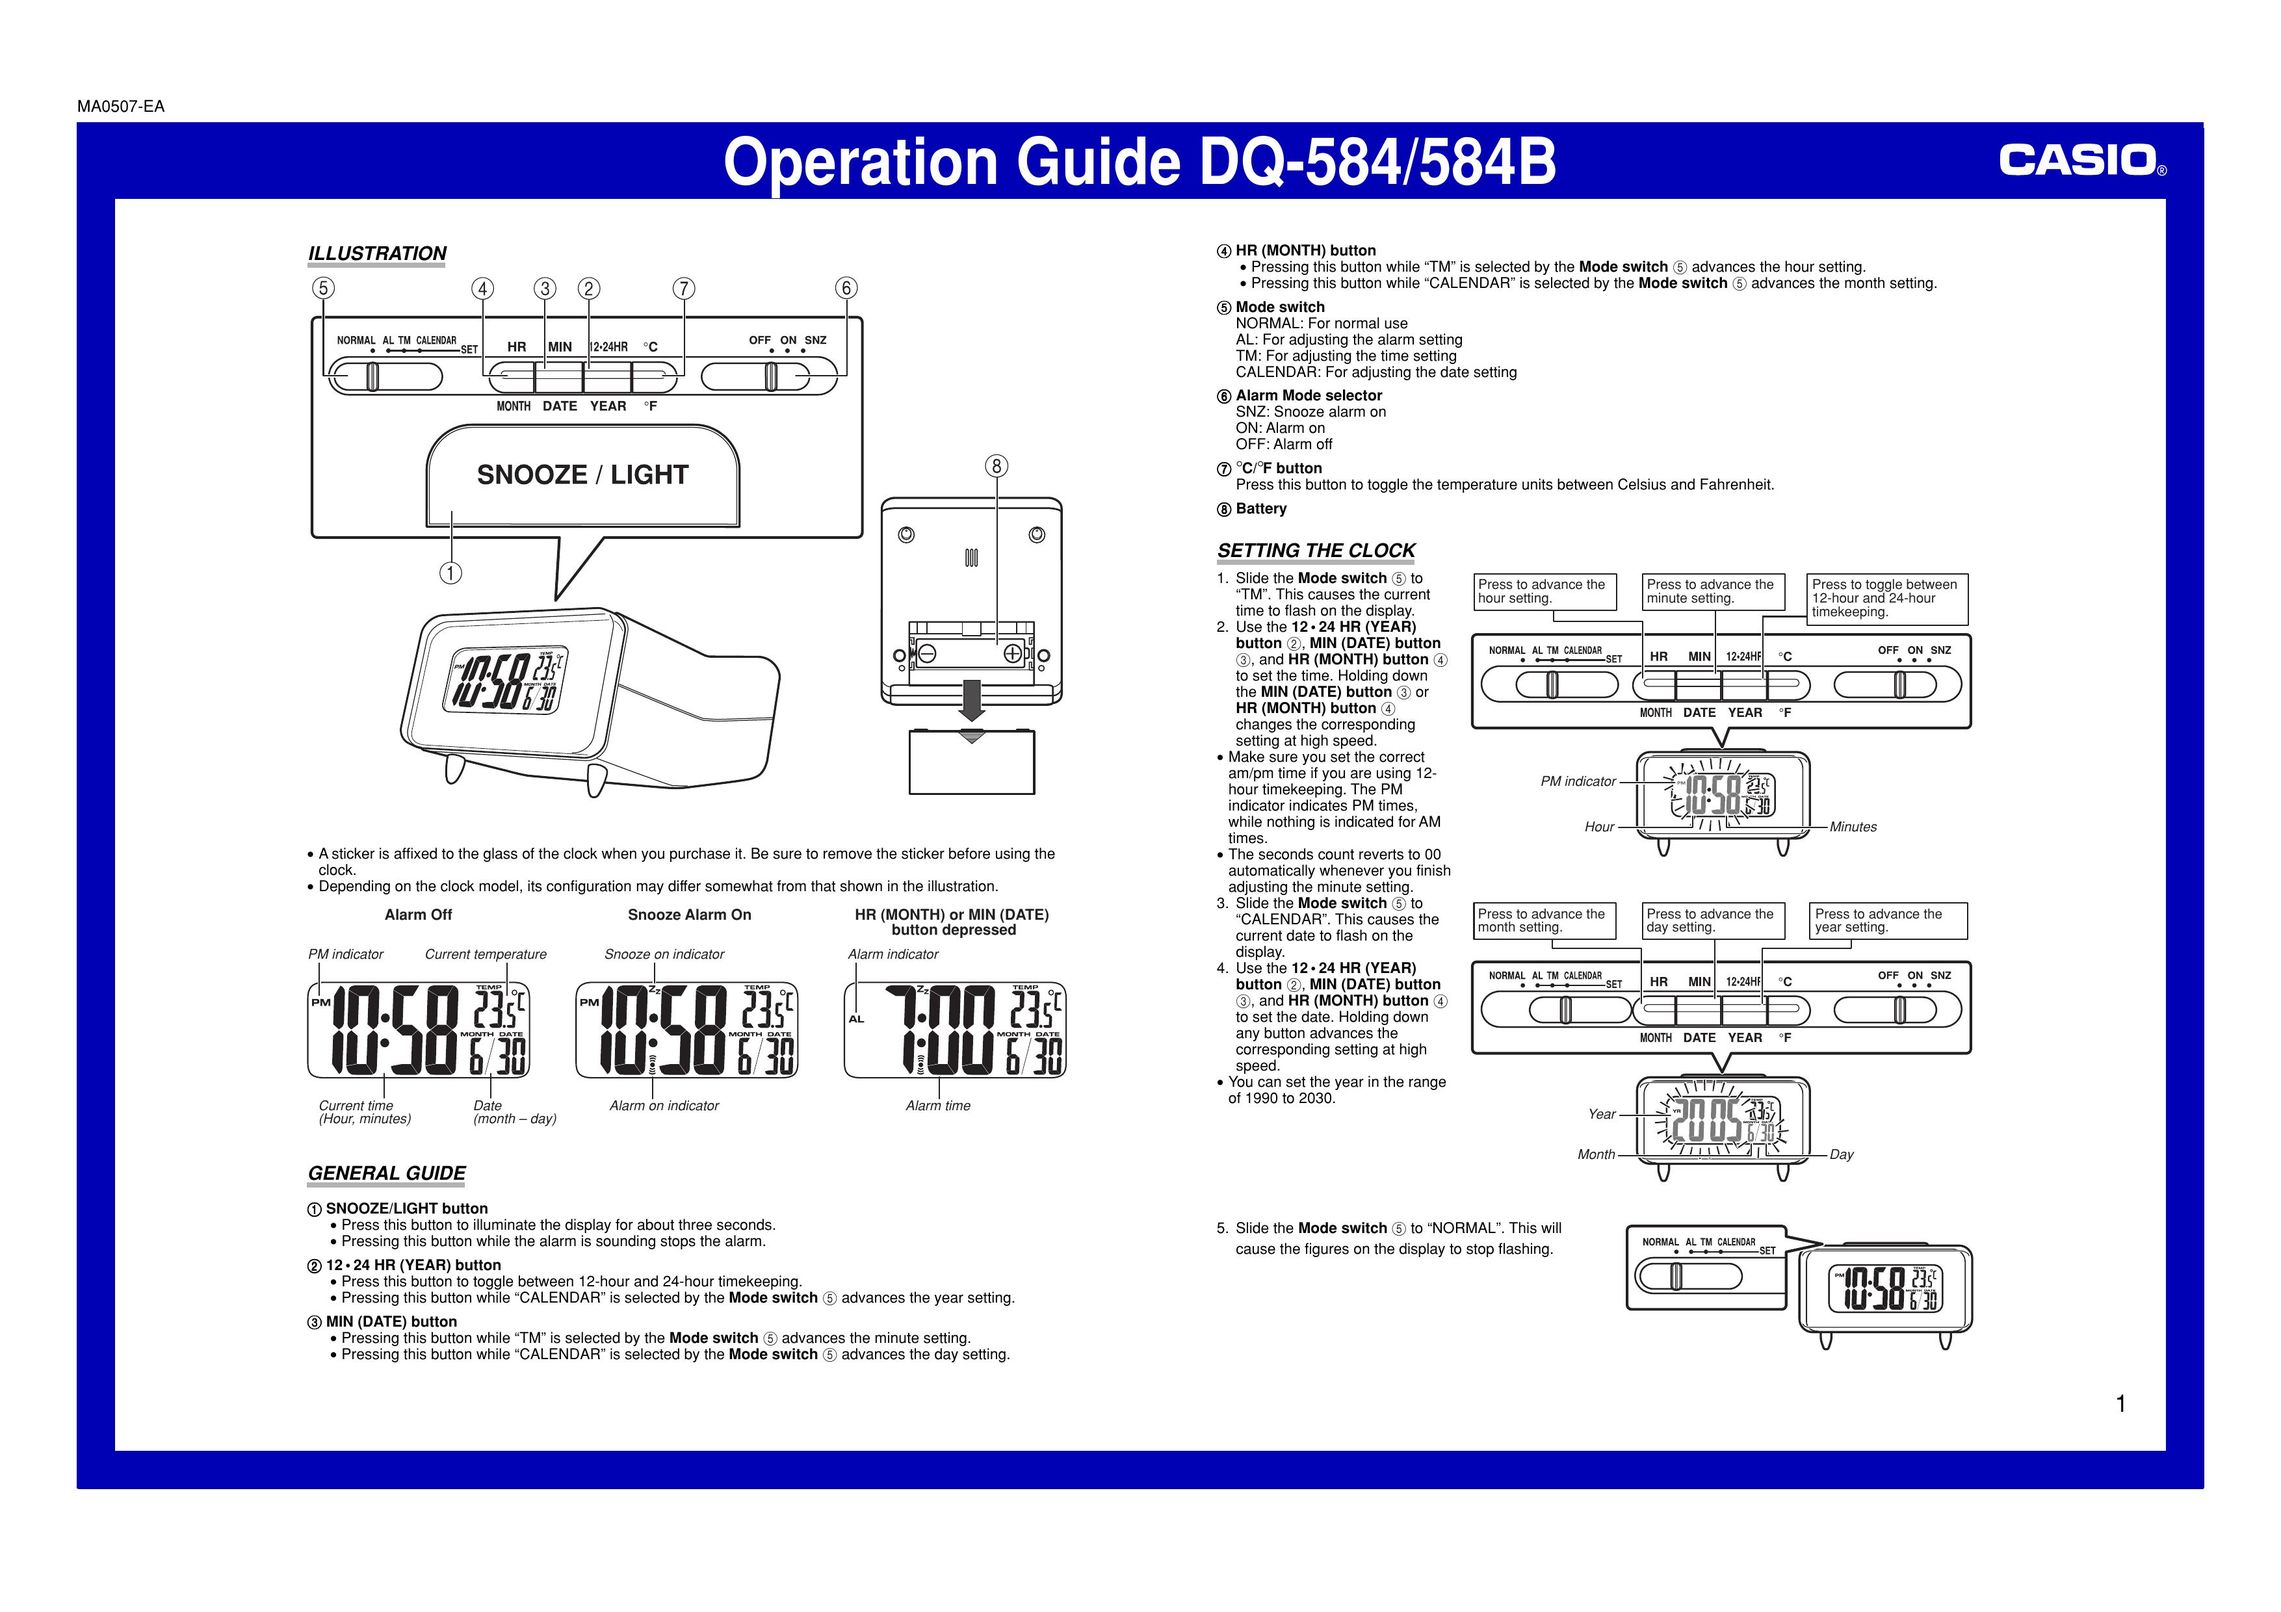 Casio DQ-584B Computer Hardware User Manual